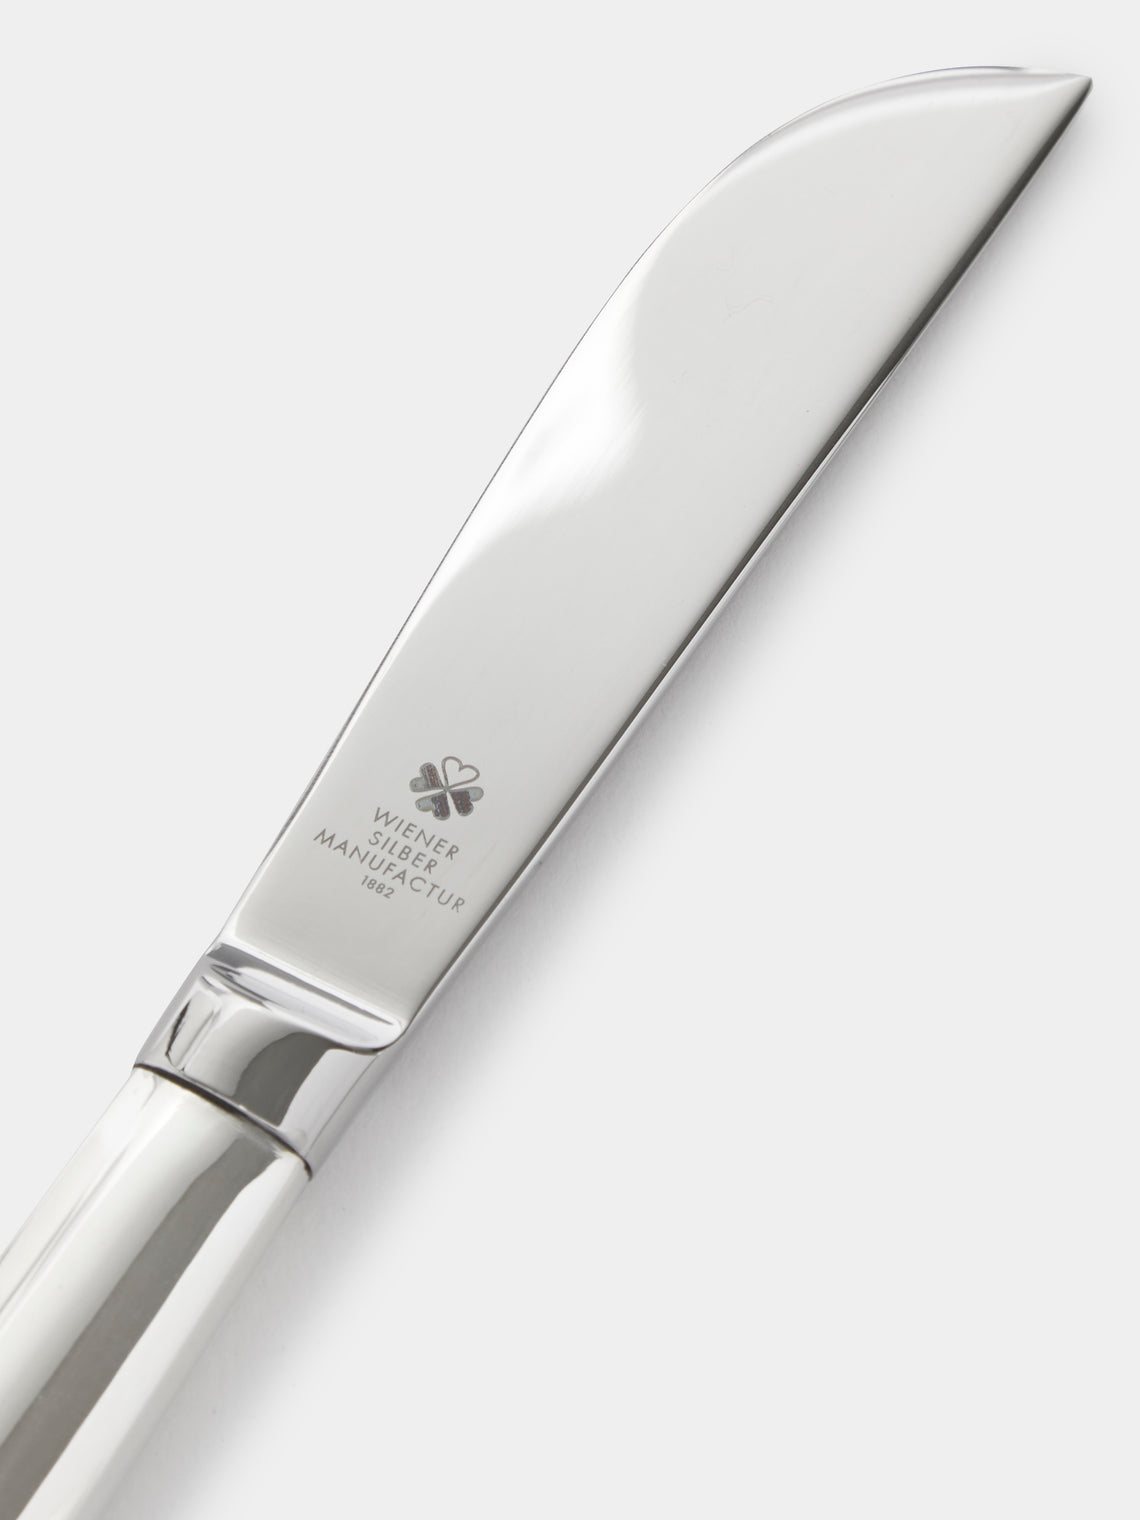 Wiener Silber Manufactur - Josef Hoffmann 135 Silver-Plated Fruit Knife -  - ABASK